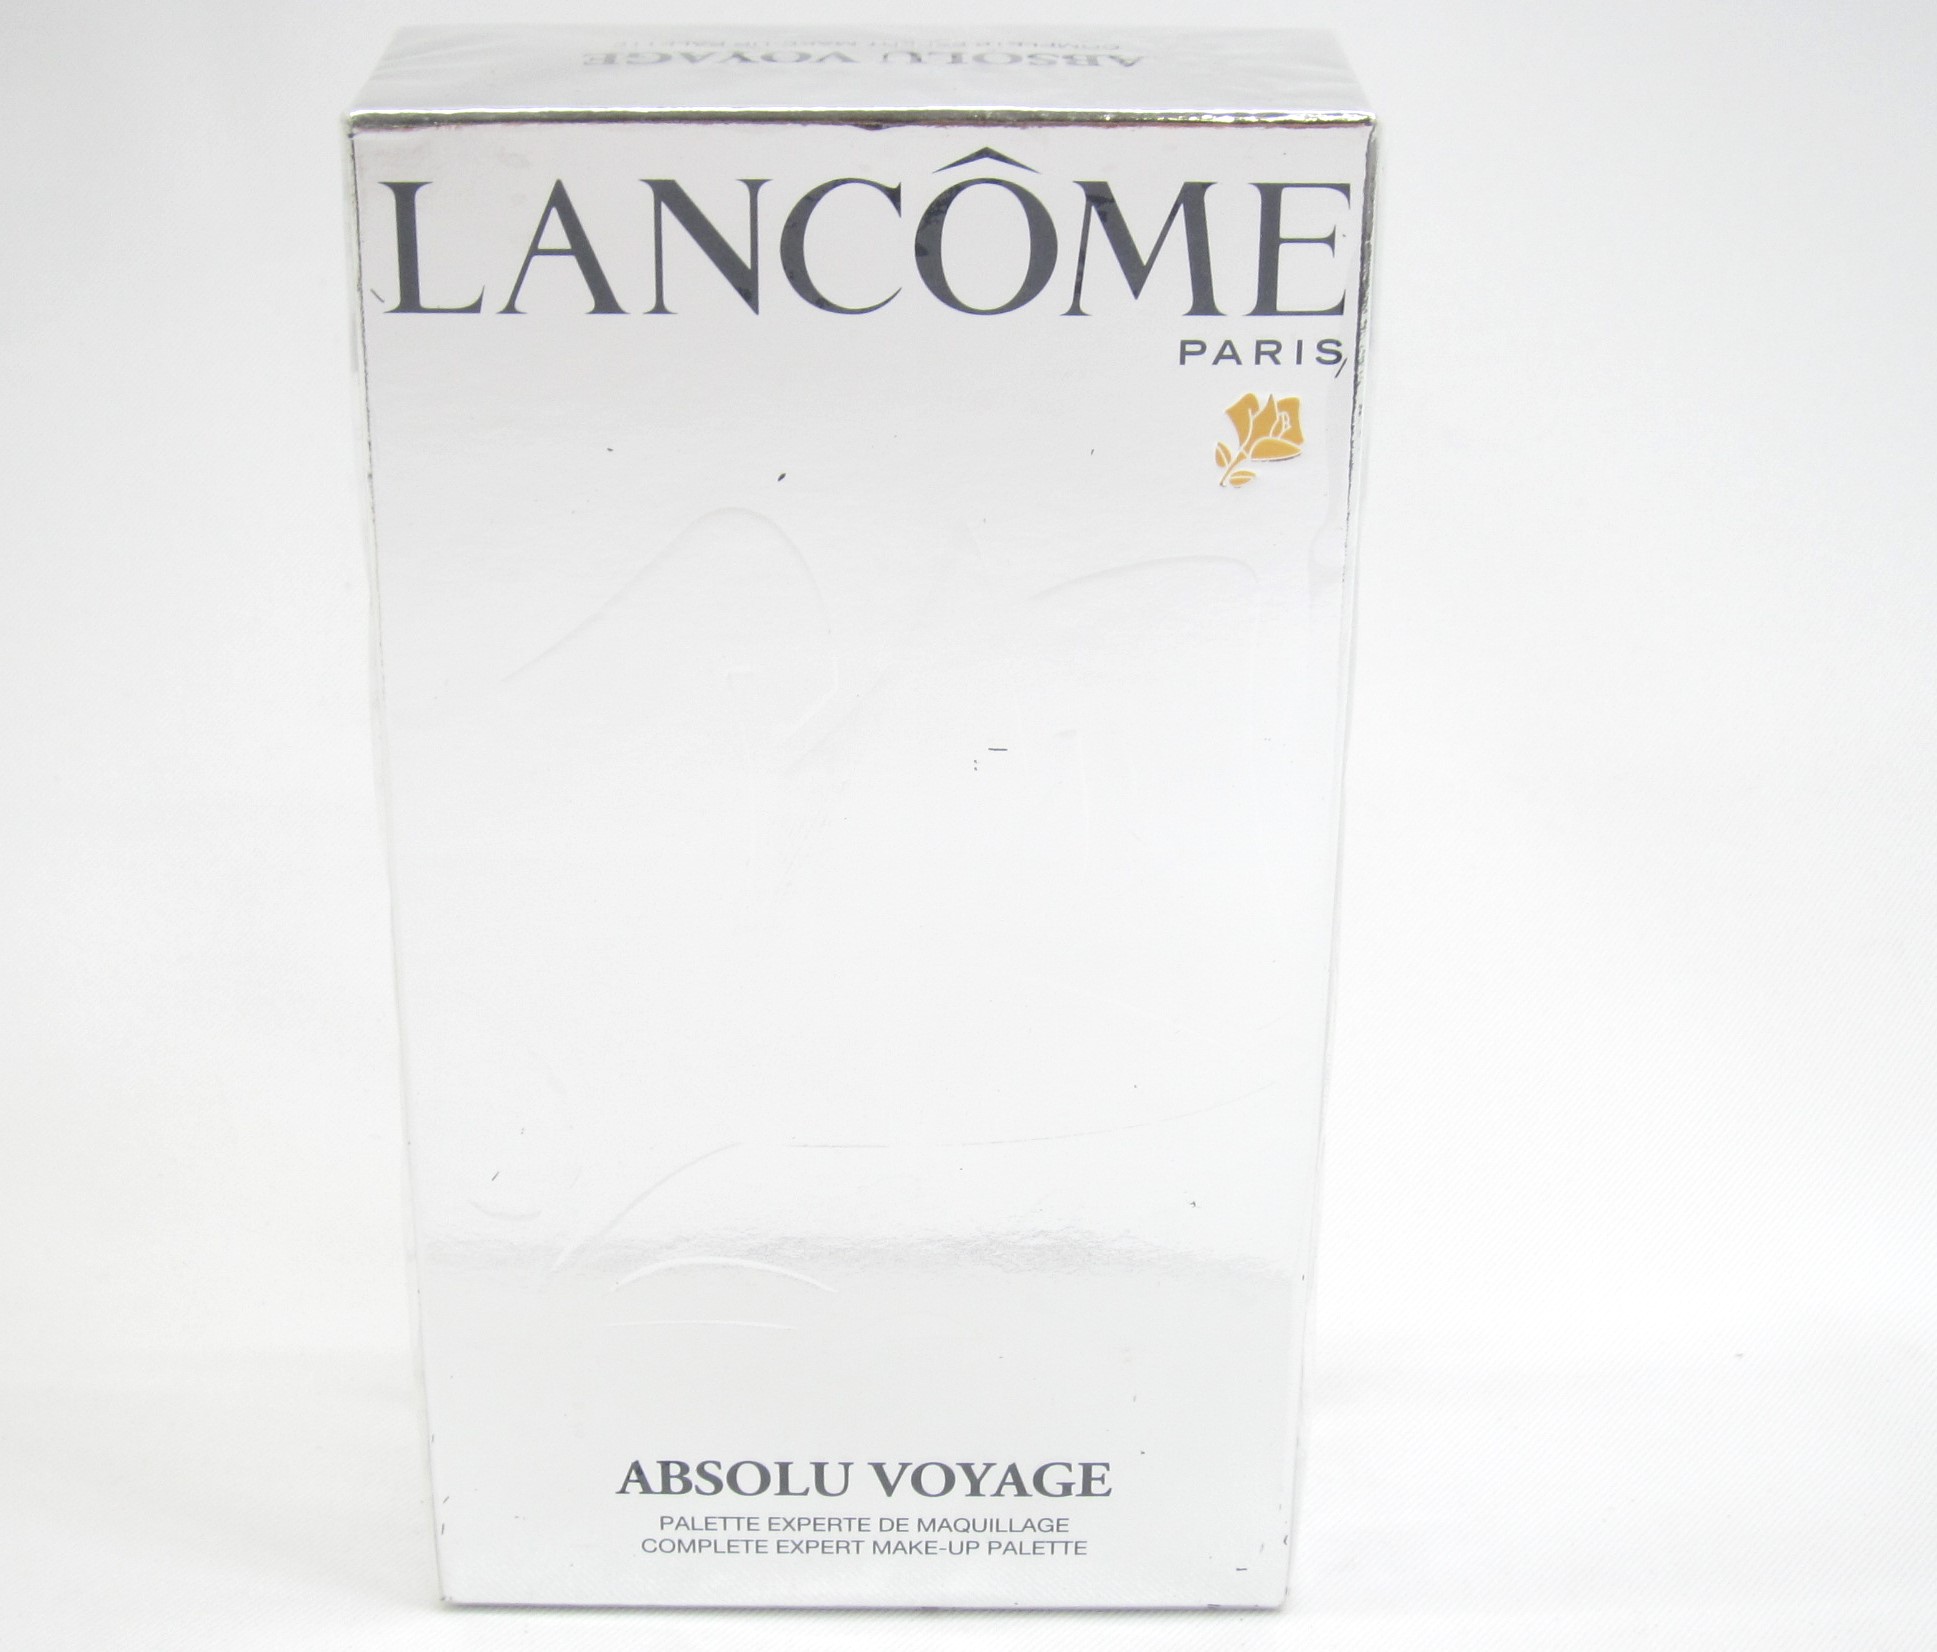  unused LANCOME Lancome absorber ryuboya-ju Complete make-up kit *UA10438